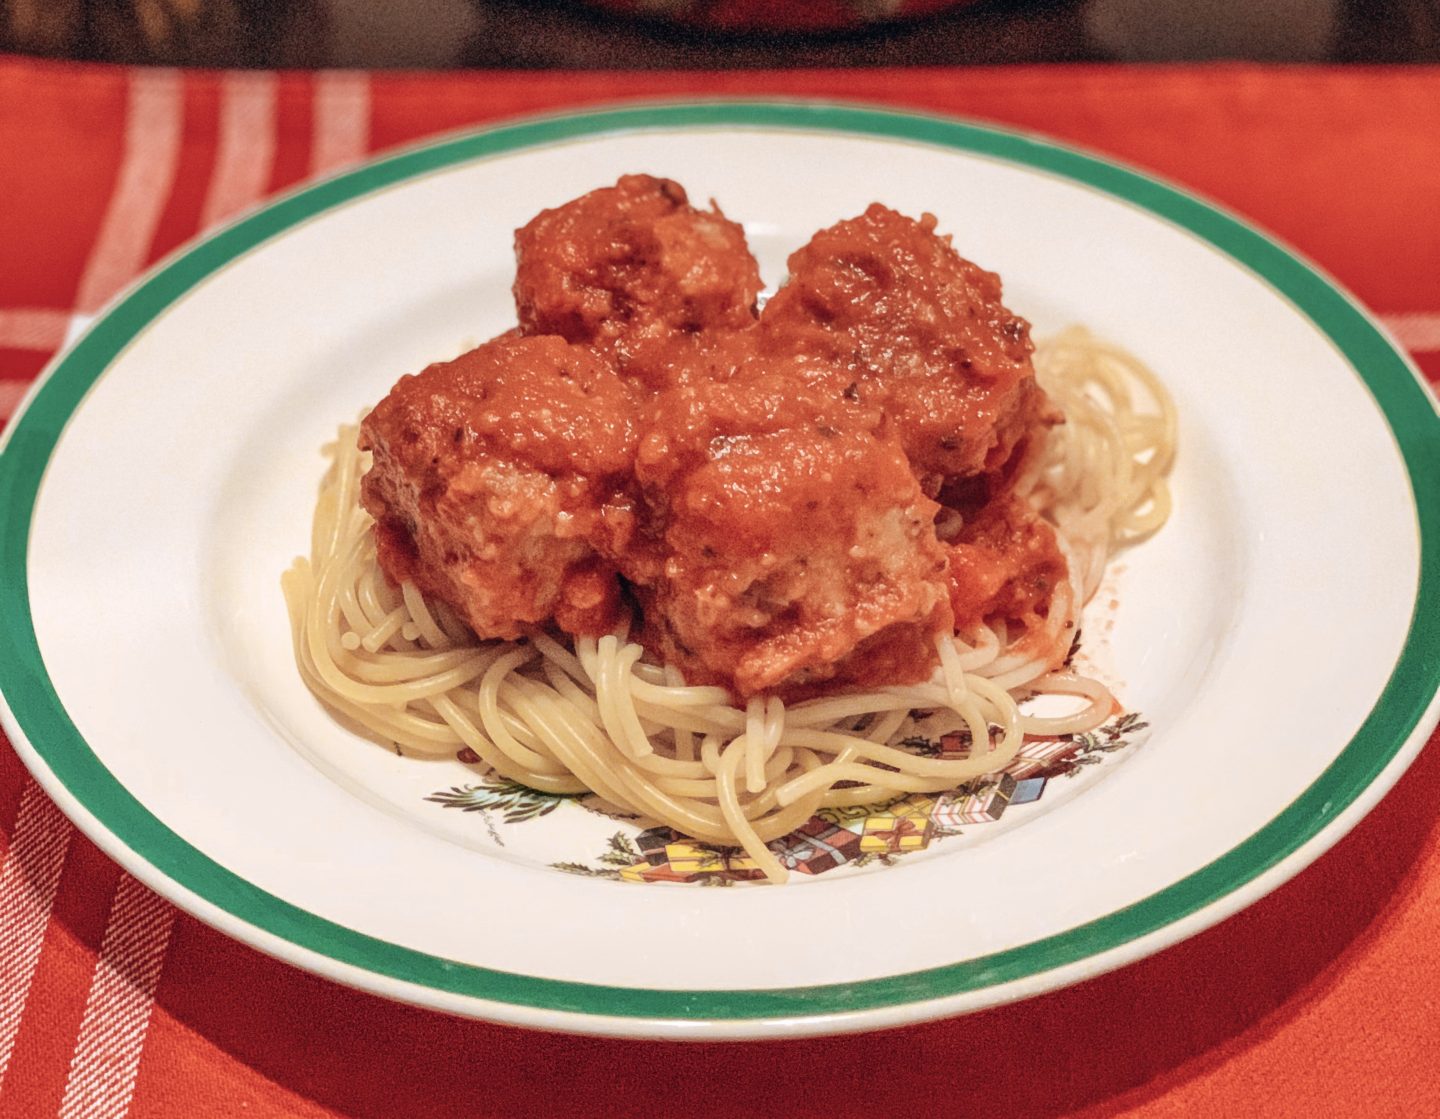 Cauliflower "Meatballs" for Spaghetti - The Foodie Takes Flight